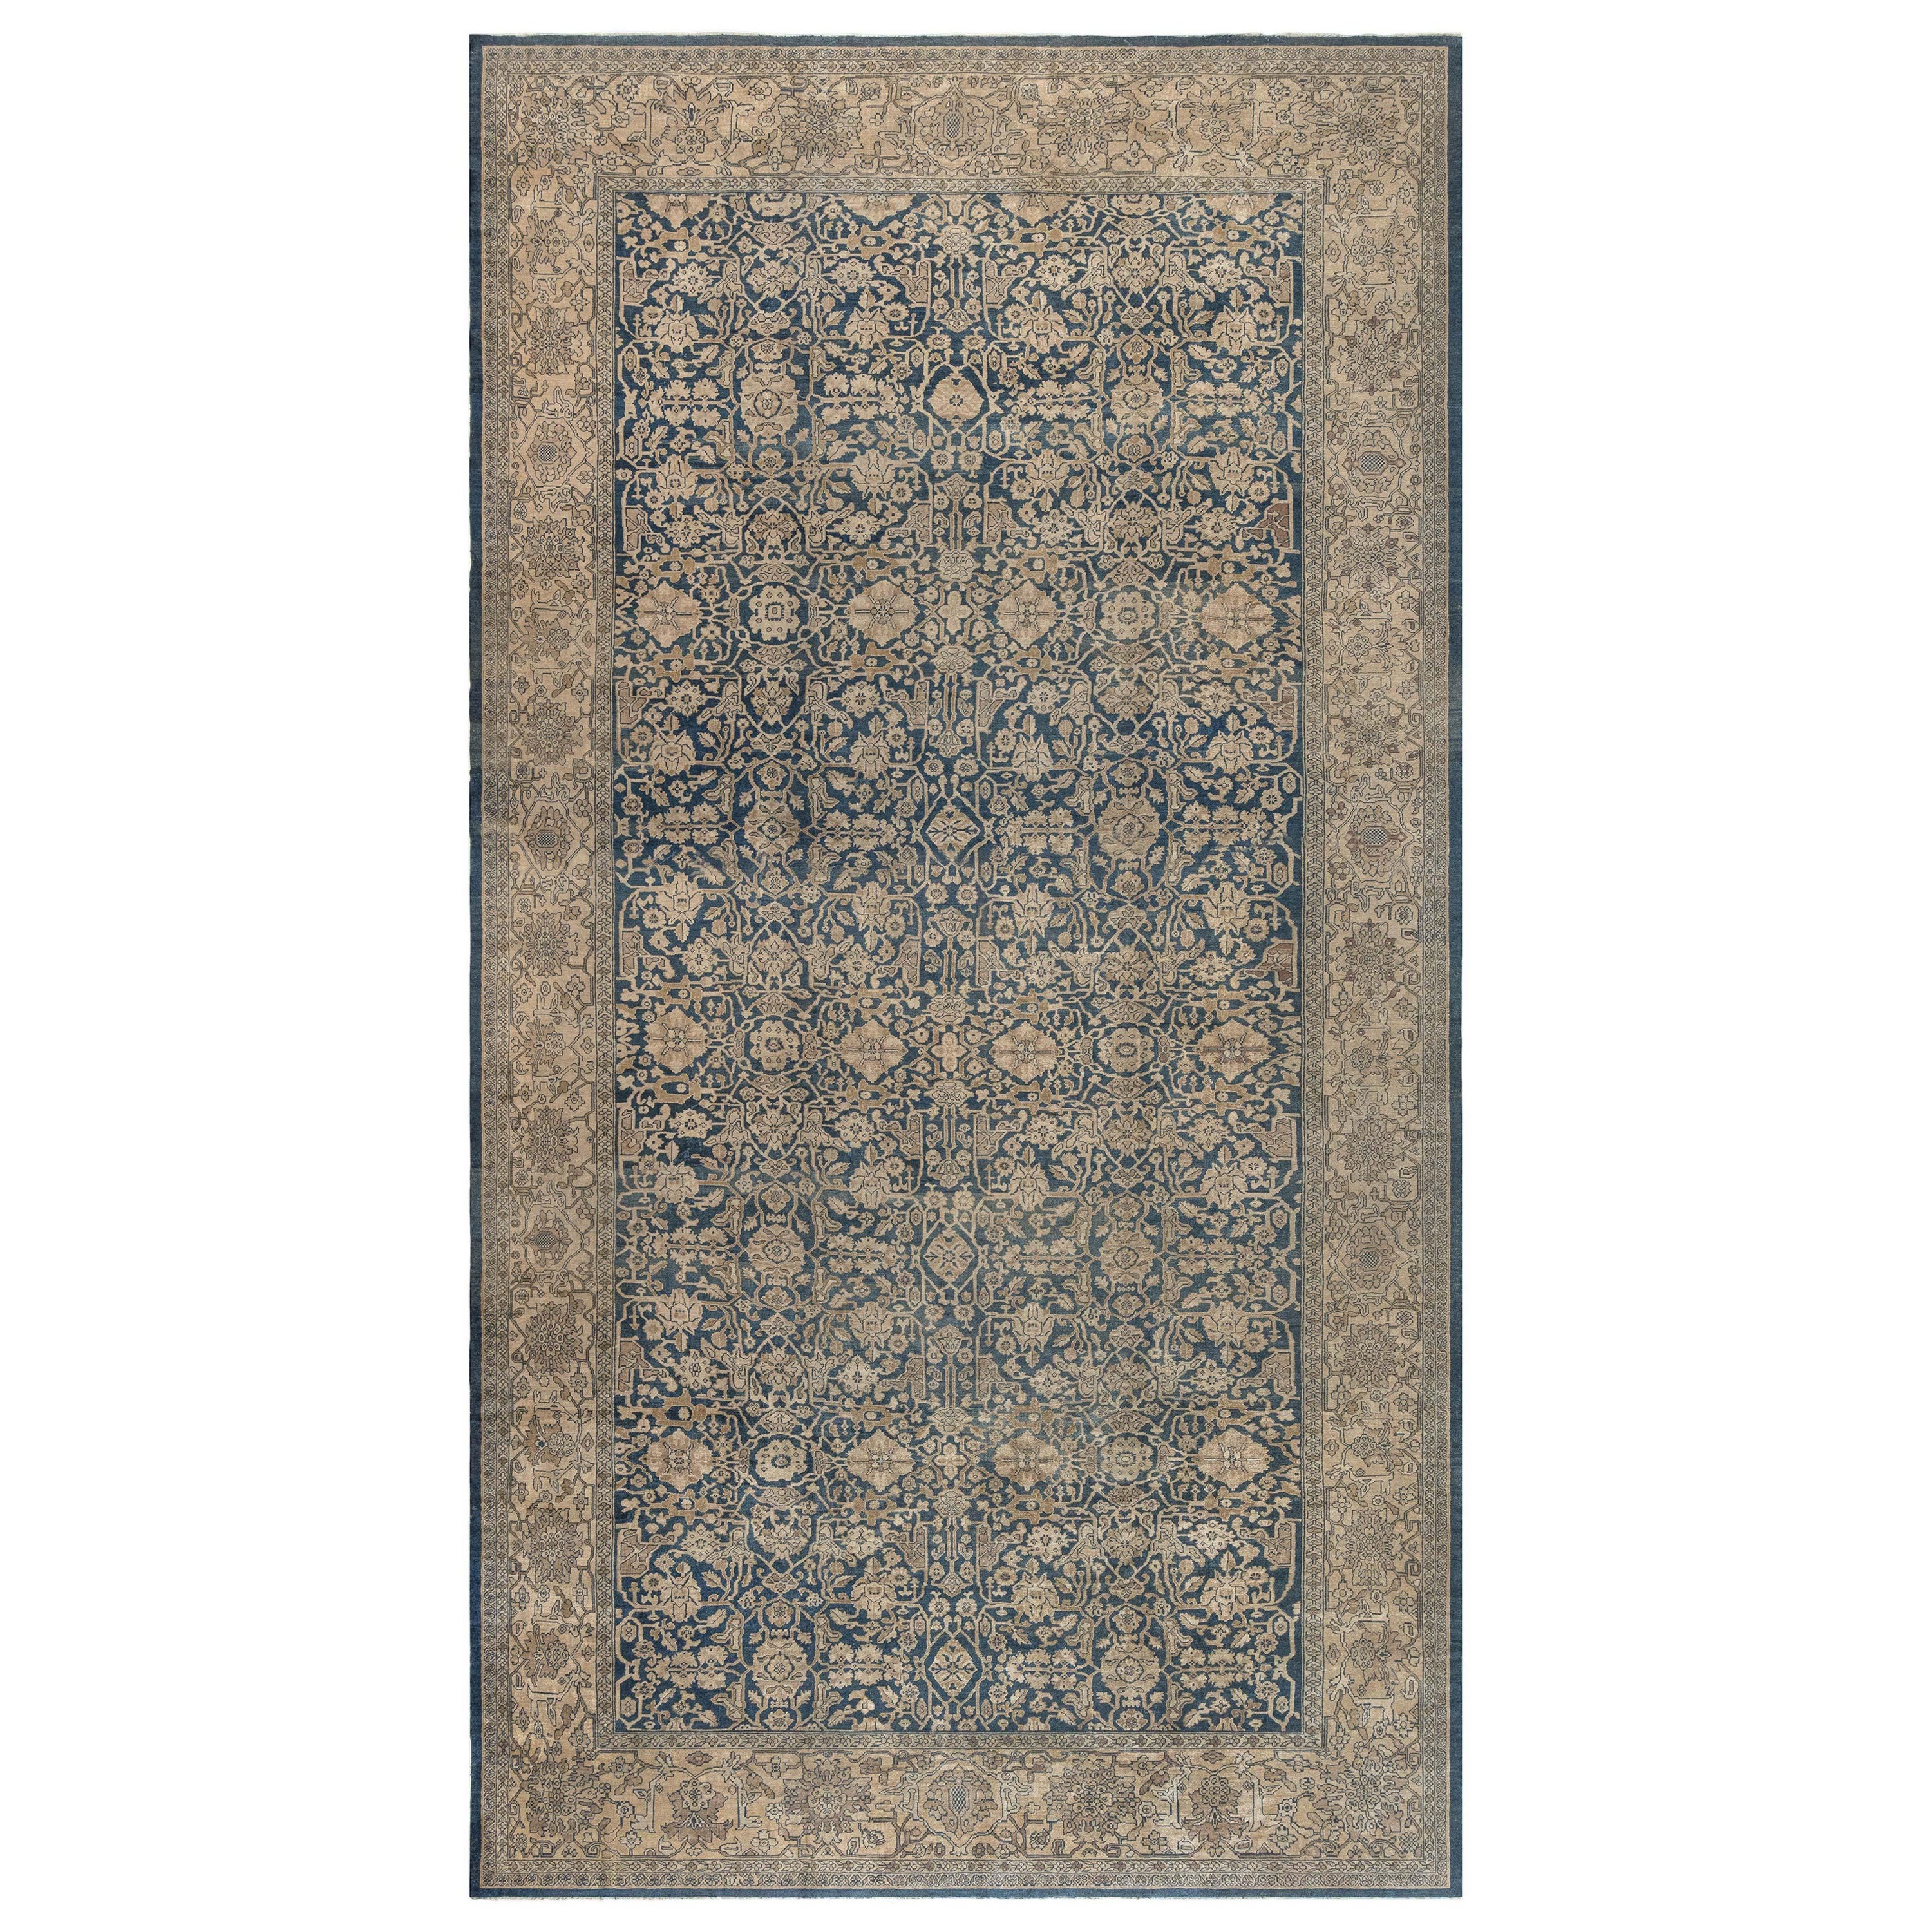 Large Antique Persian Sultanabad Carpet